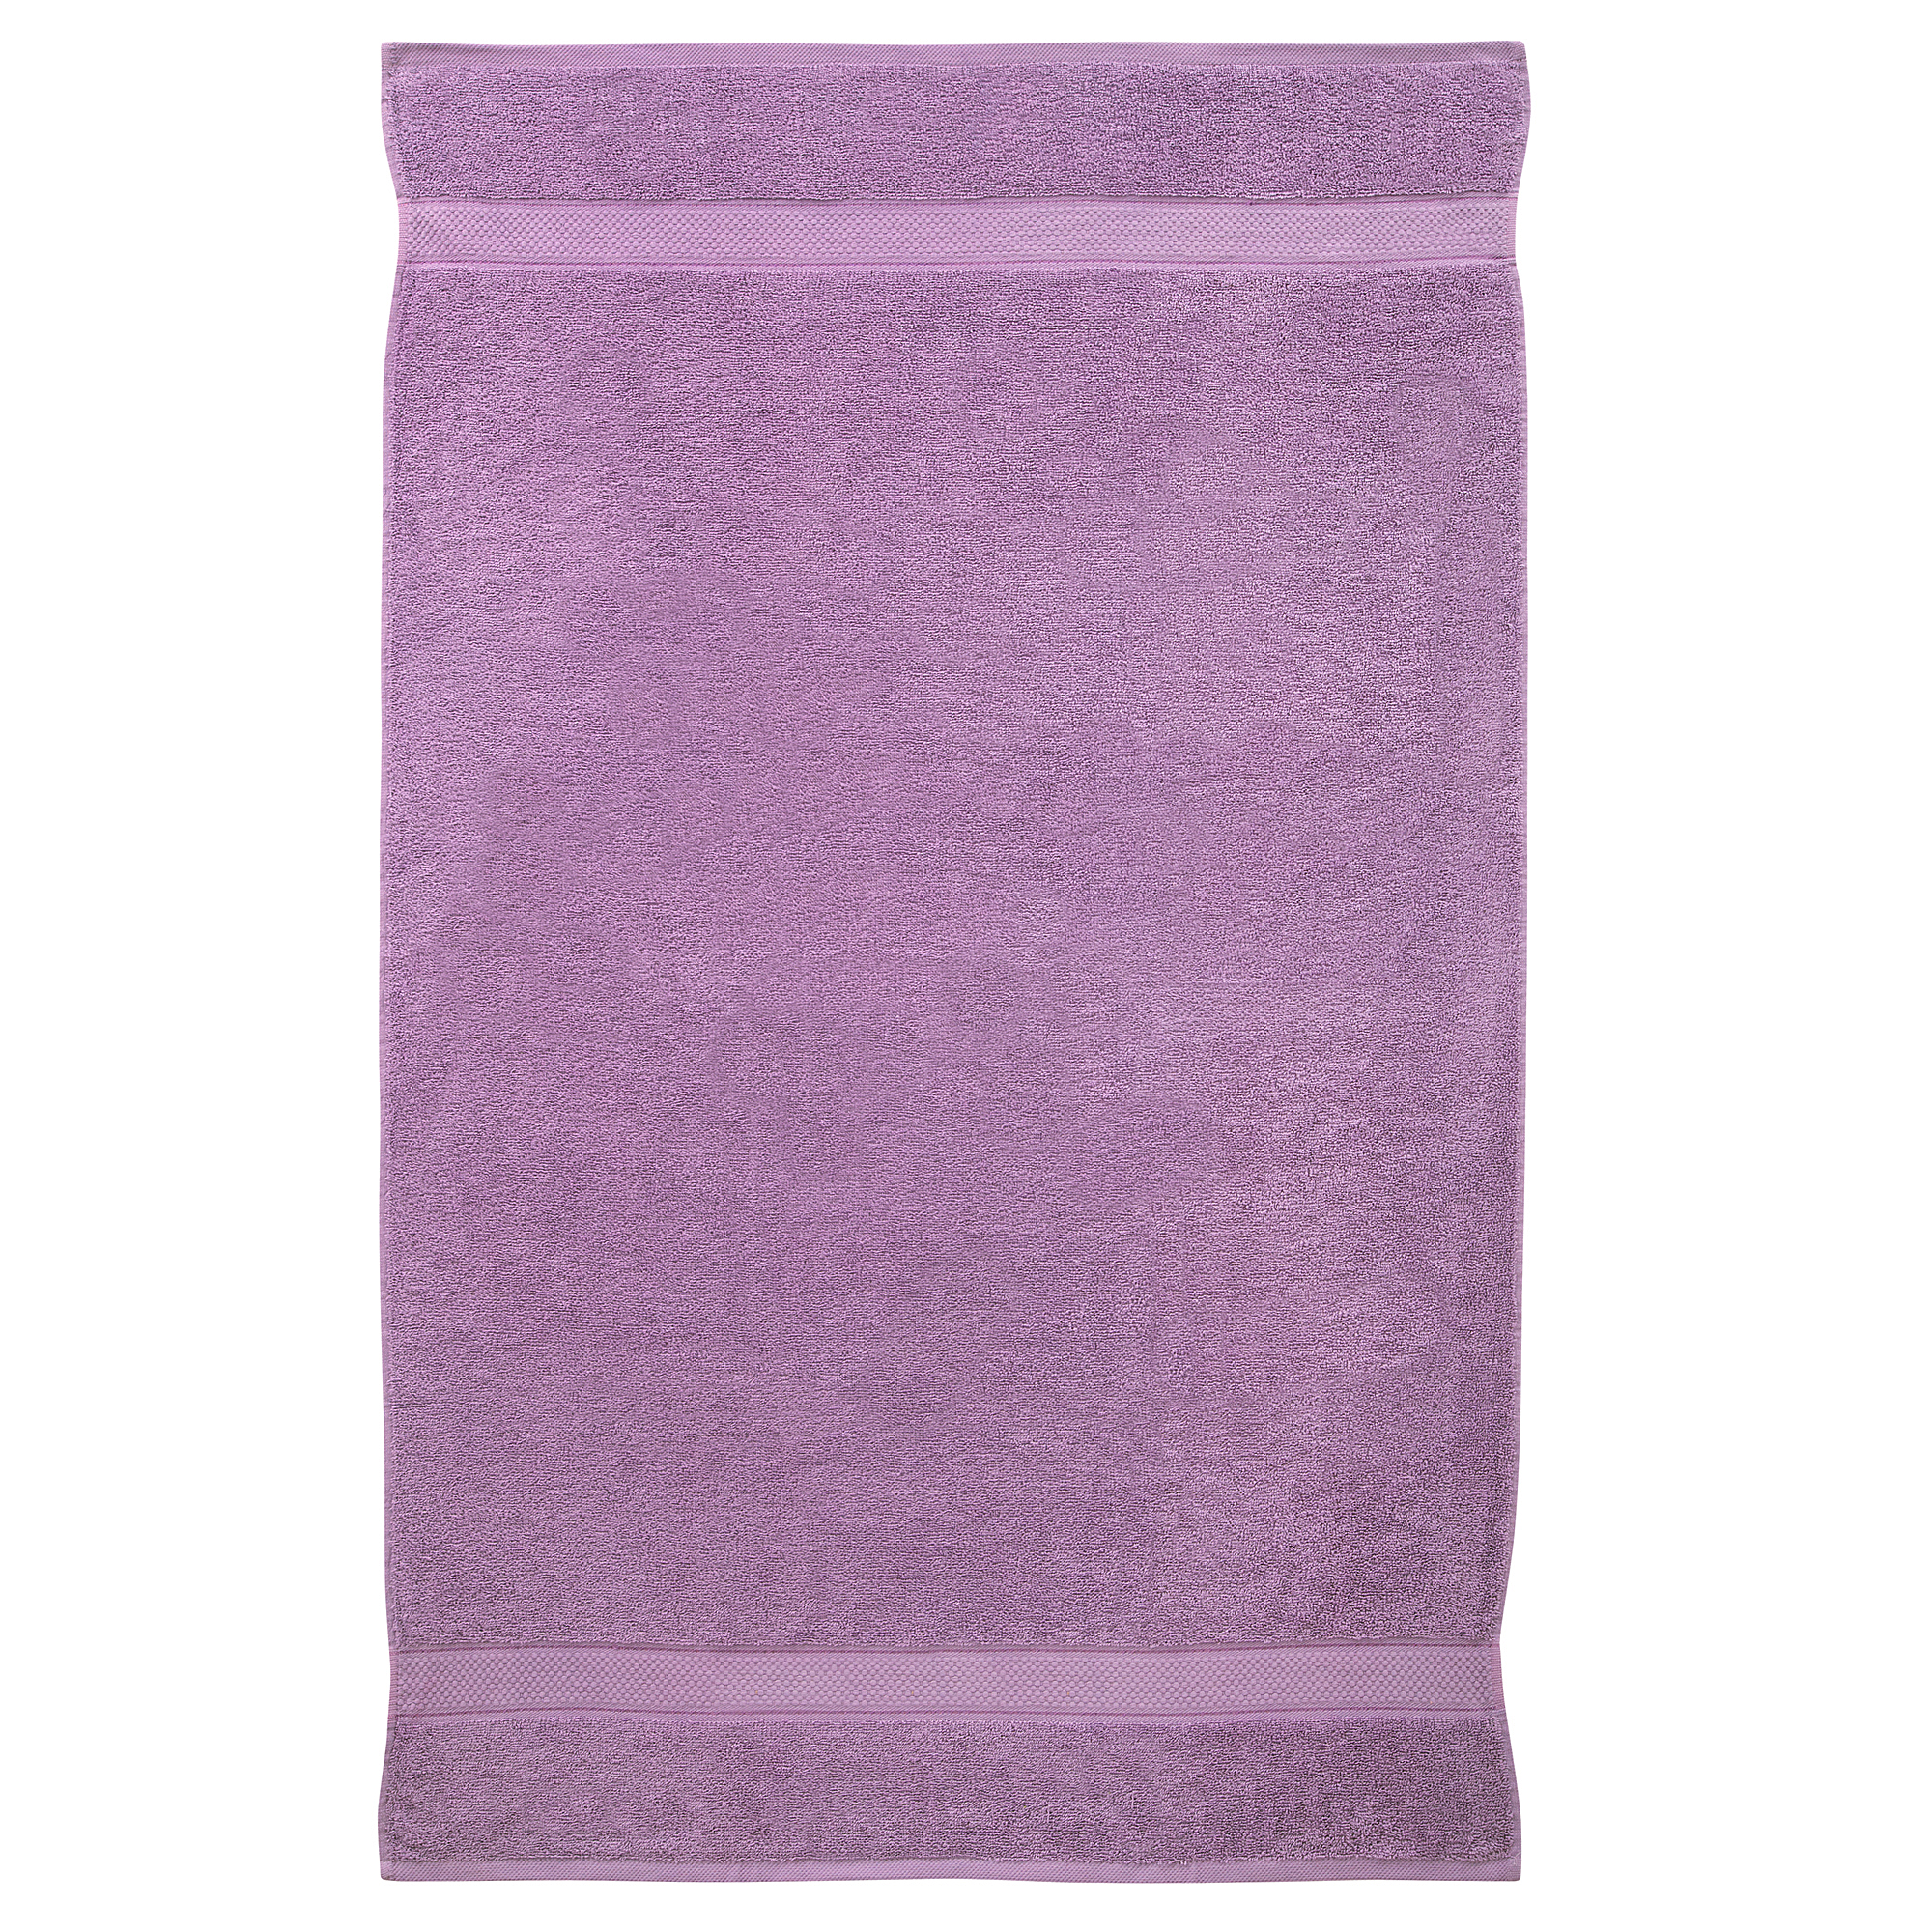 2 Pcs 100 % Cotton Premium Bath Sheet Towel Bale Set Lilac Plain ...